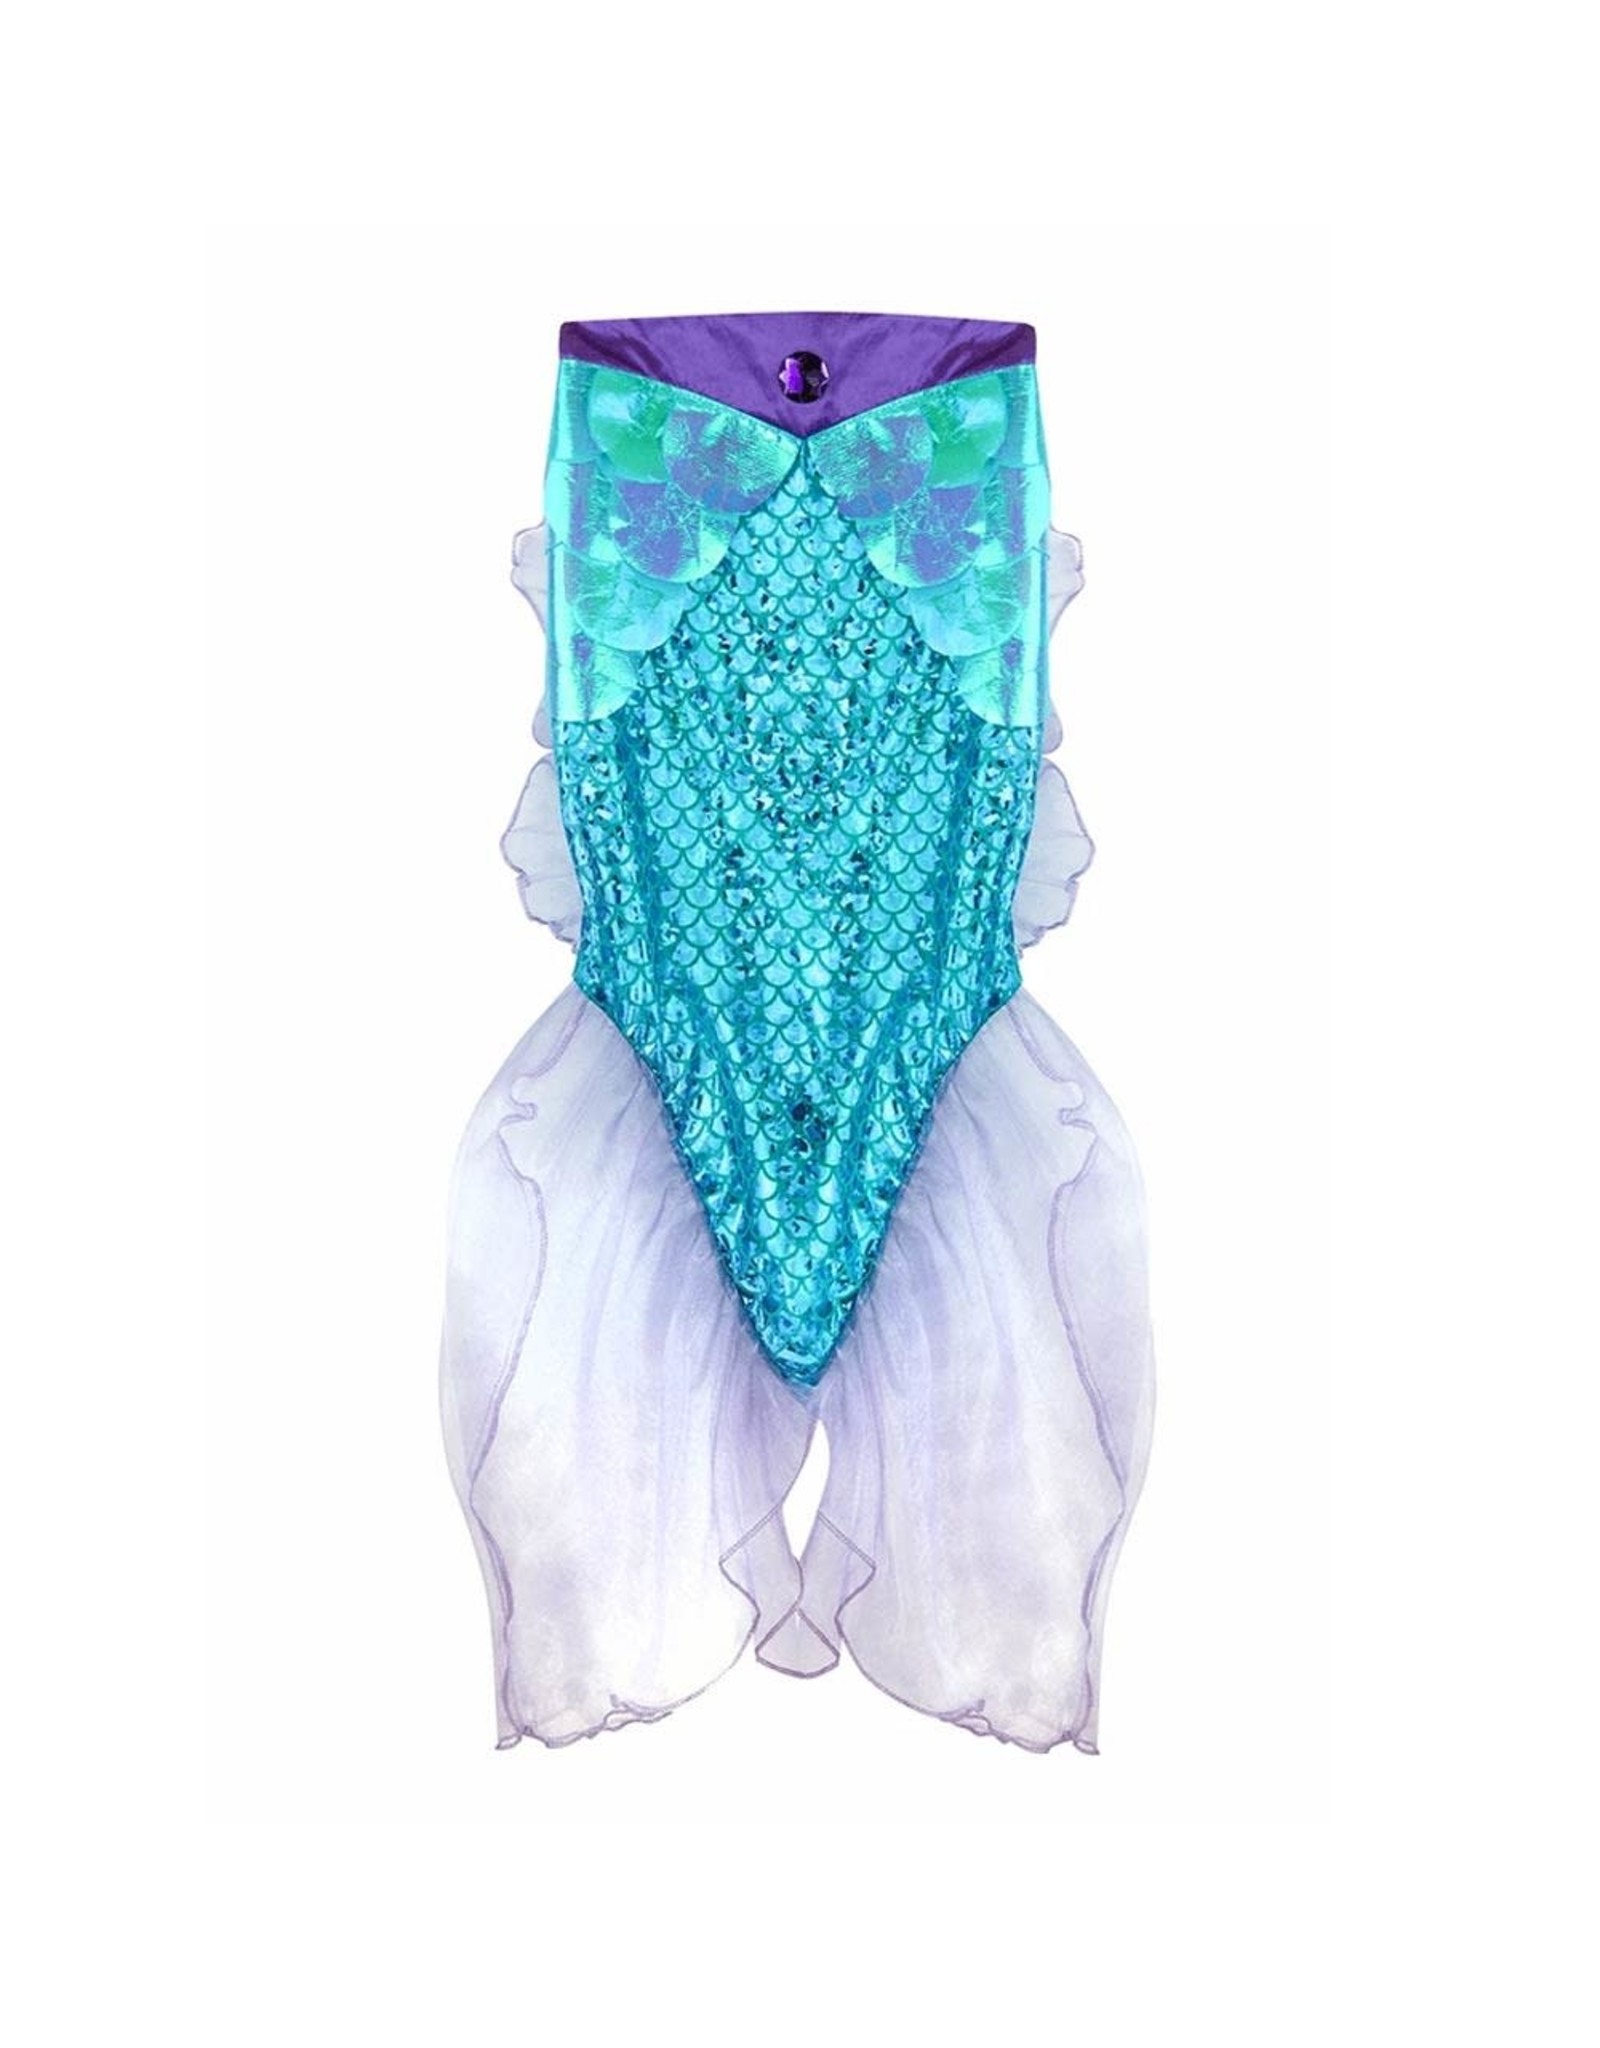 Great Pretenders Mermaid Glimmer Skirt Set, Size 5/6